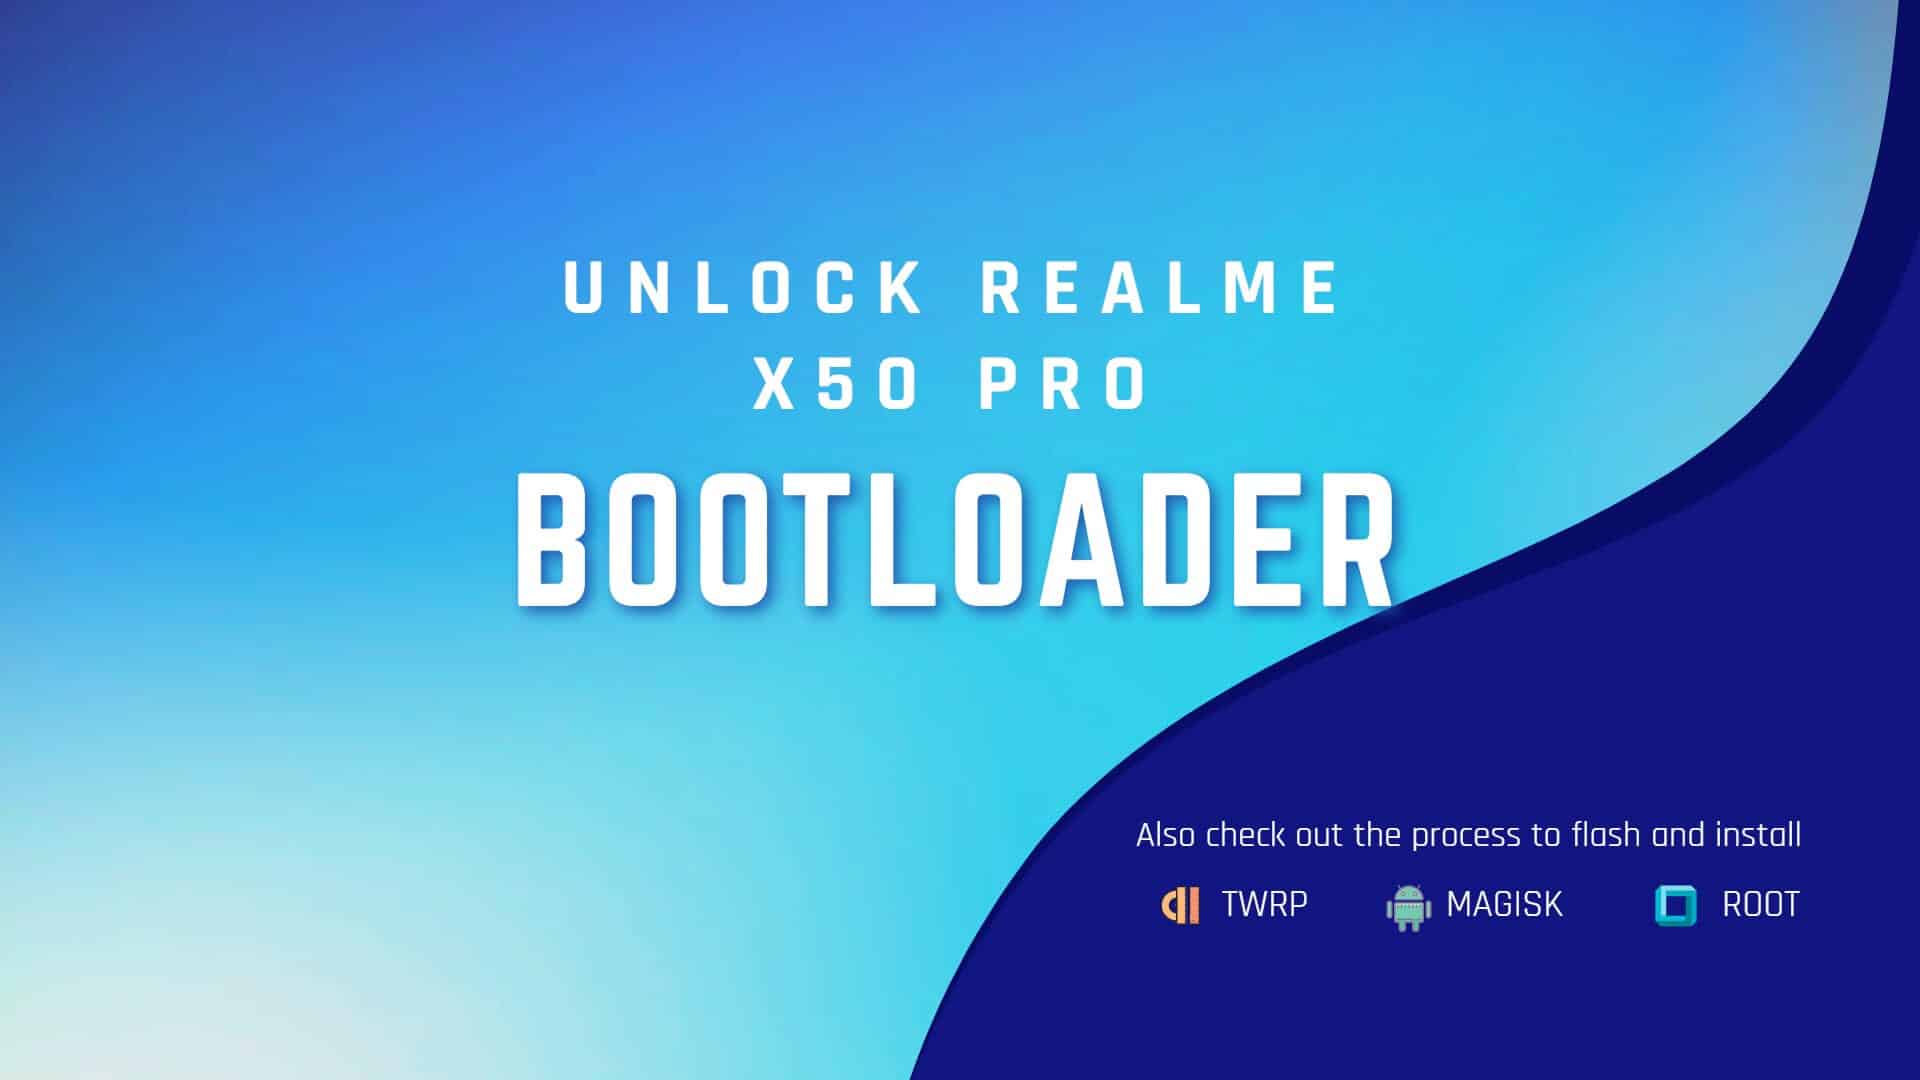 Tutorial to Unlock Realme X50 Pro Bootloader